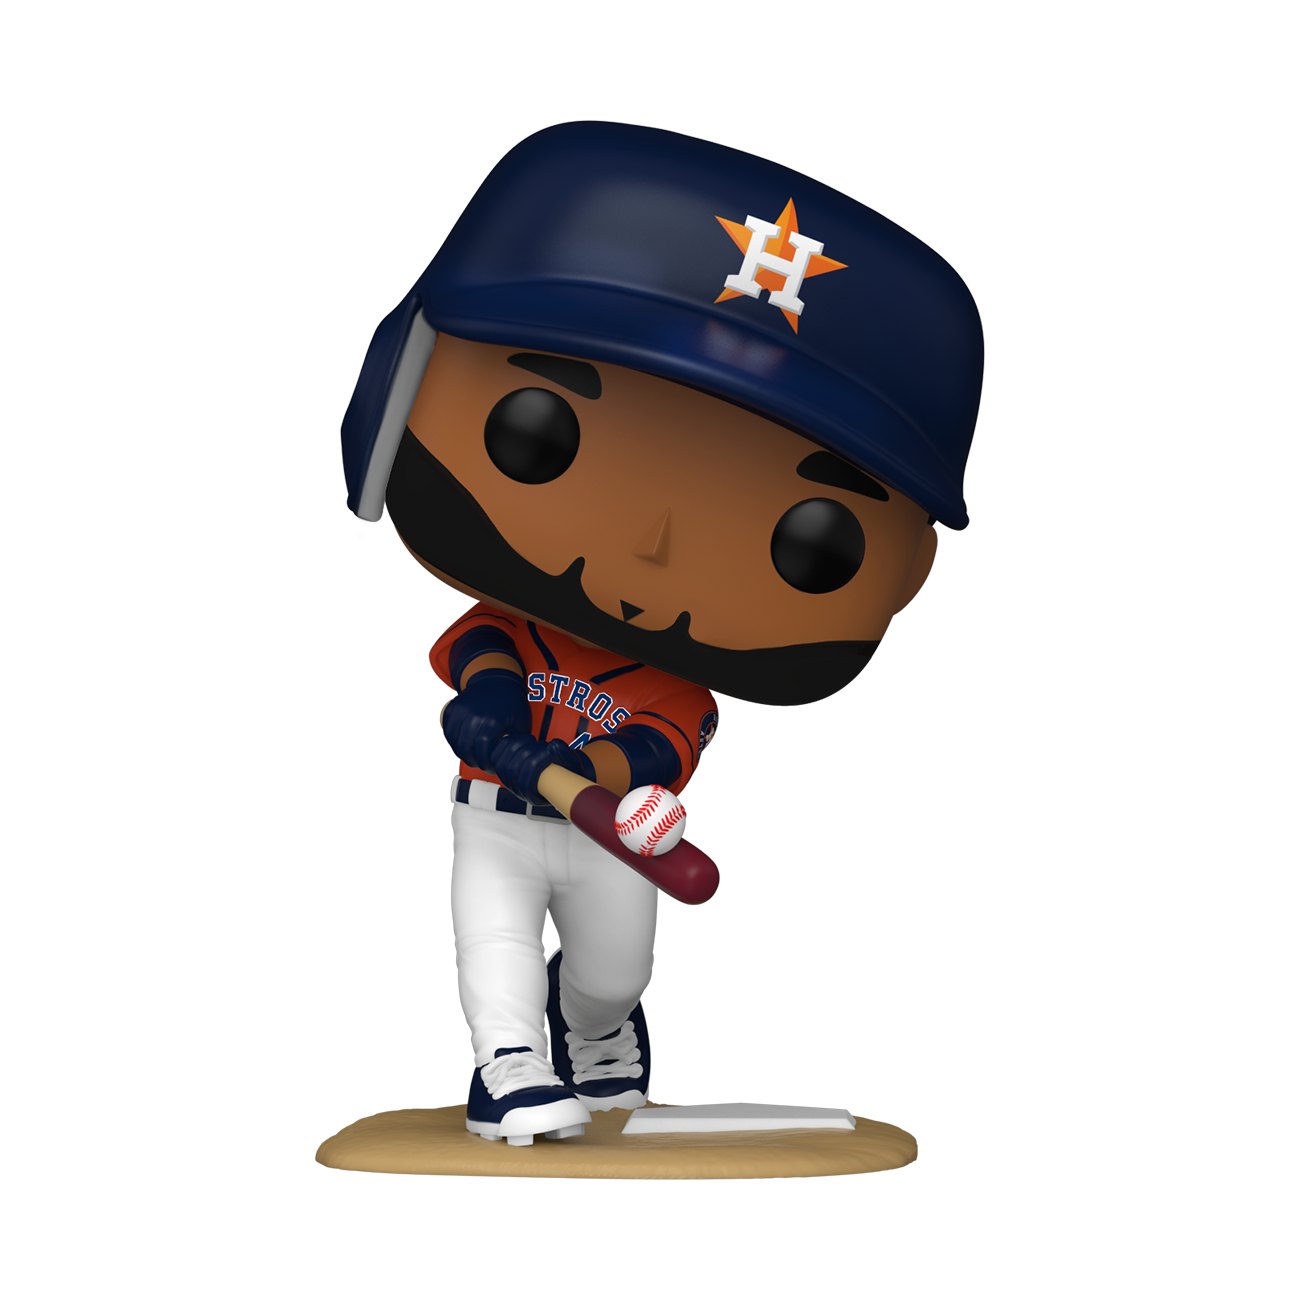 Official Houston Astros Toys, Astros Games, Figurines, Teddy Bears